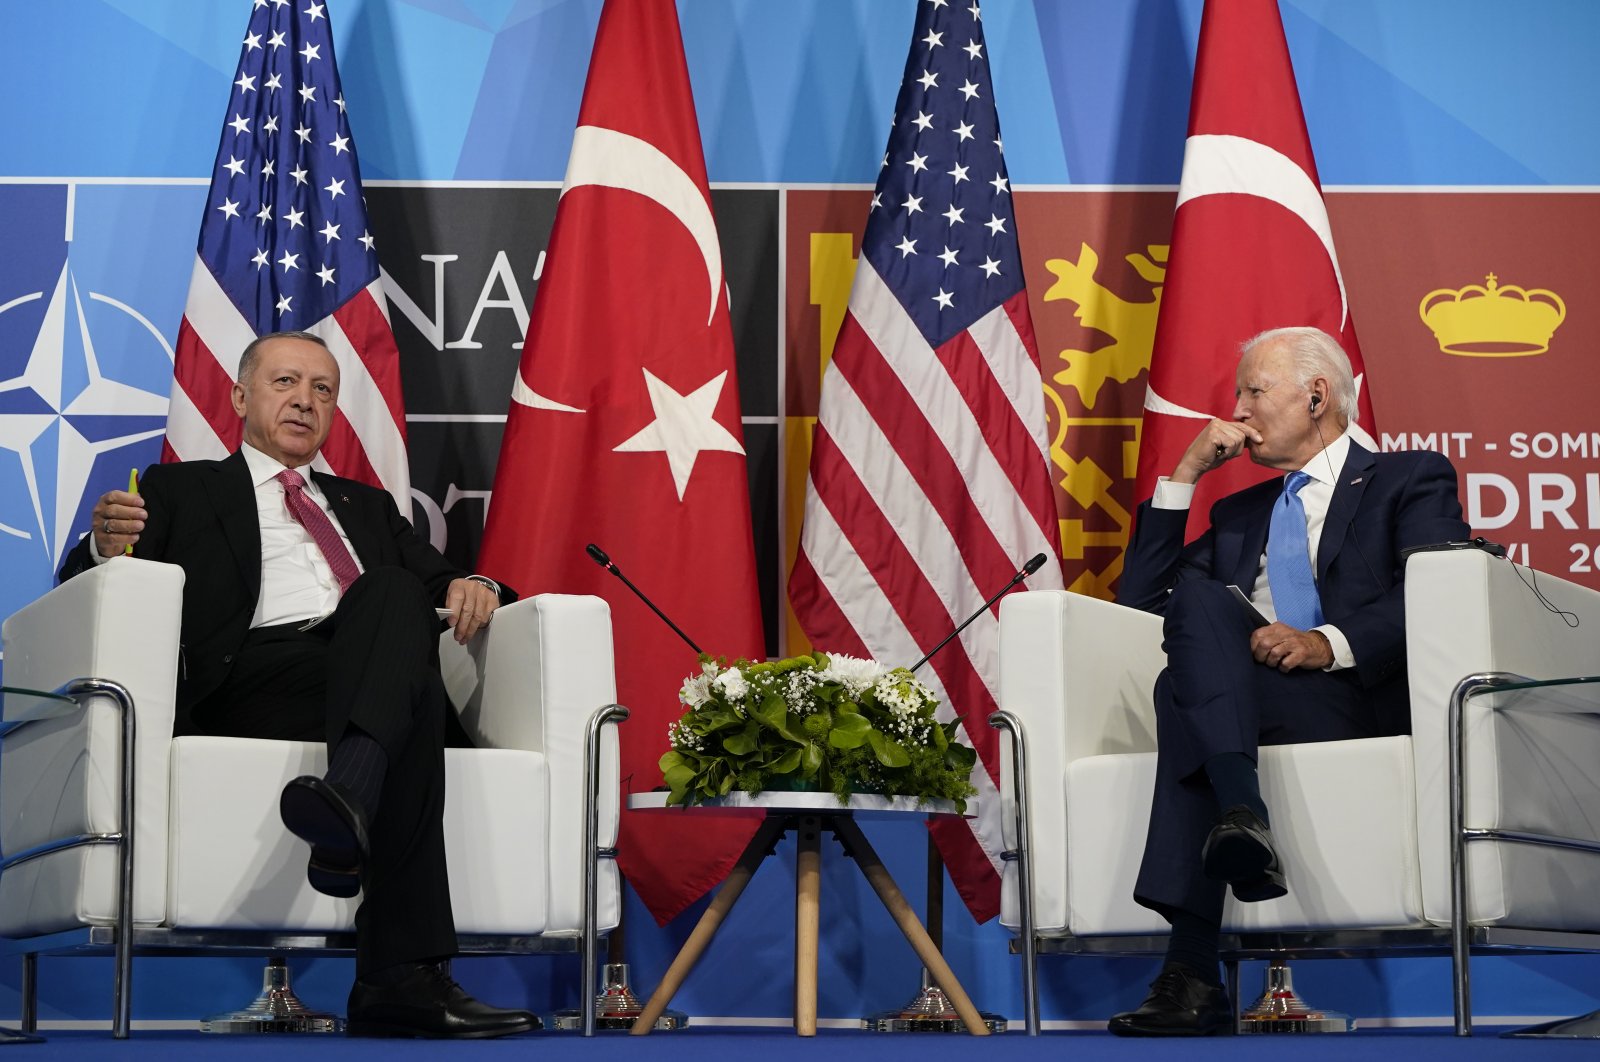 President Recep Tayyip Erdoğan and U.S. President Joe Biden during a meeting at the NATO summit in Madrid, Spain, June 29, 2022. (AP Photo)